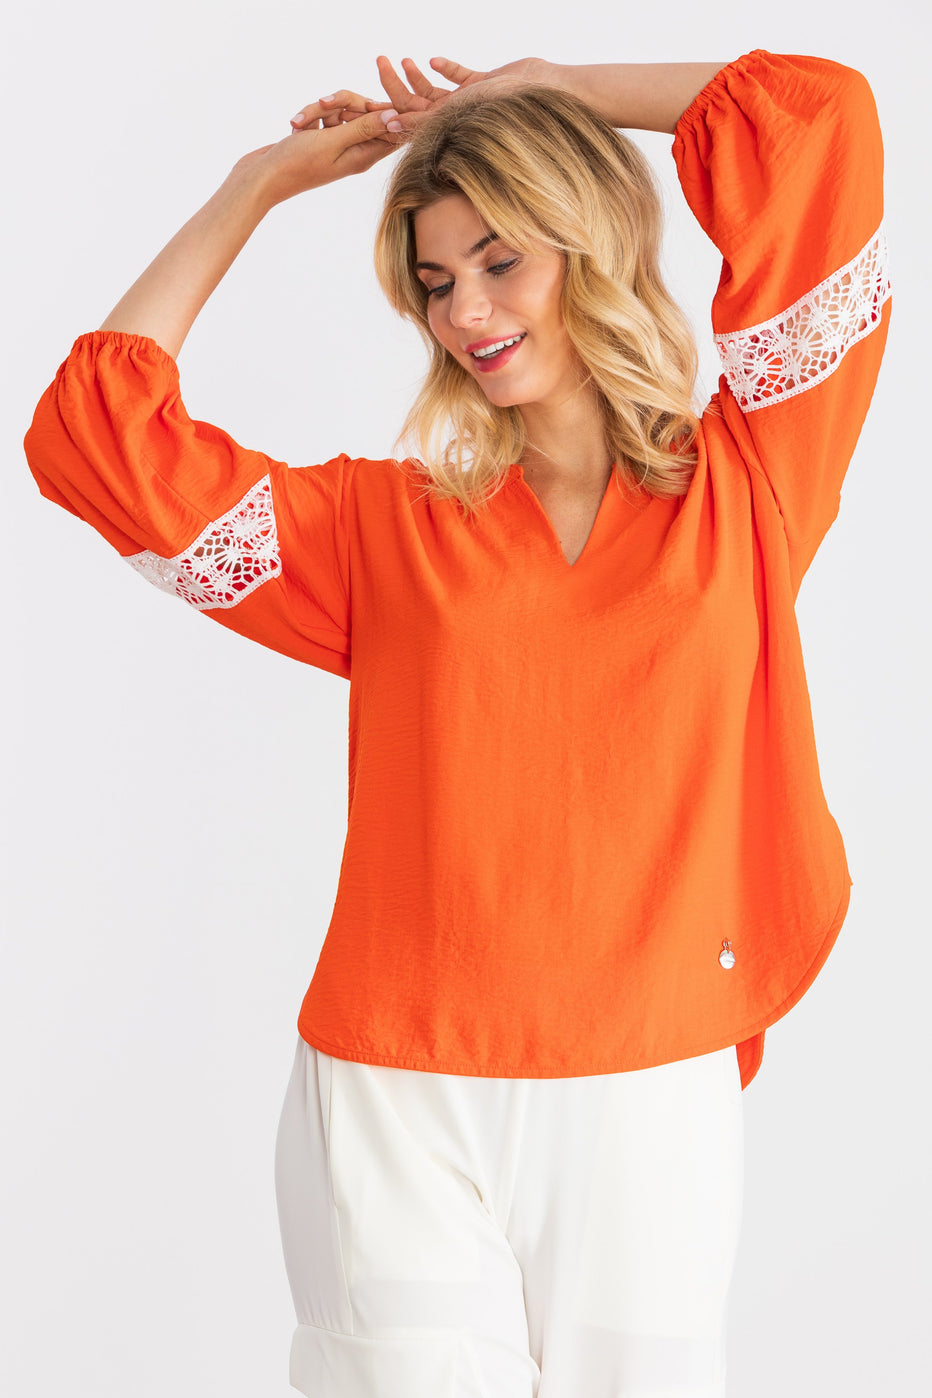 Camiseta naranja manga al codo con bordado ingles LolitasyL - lolitasyl.com